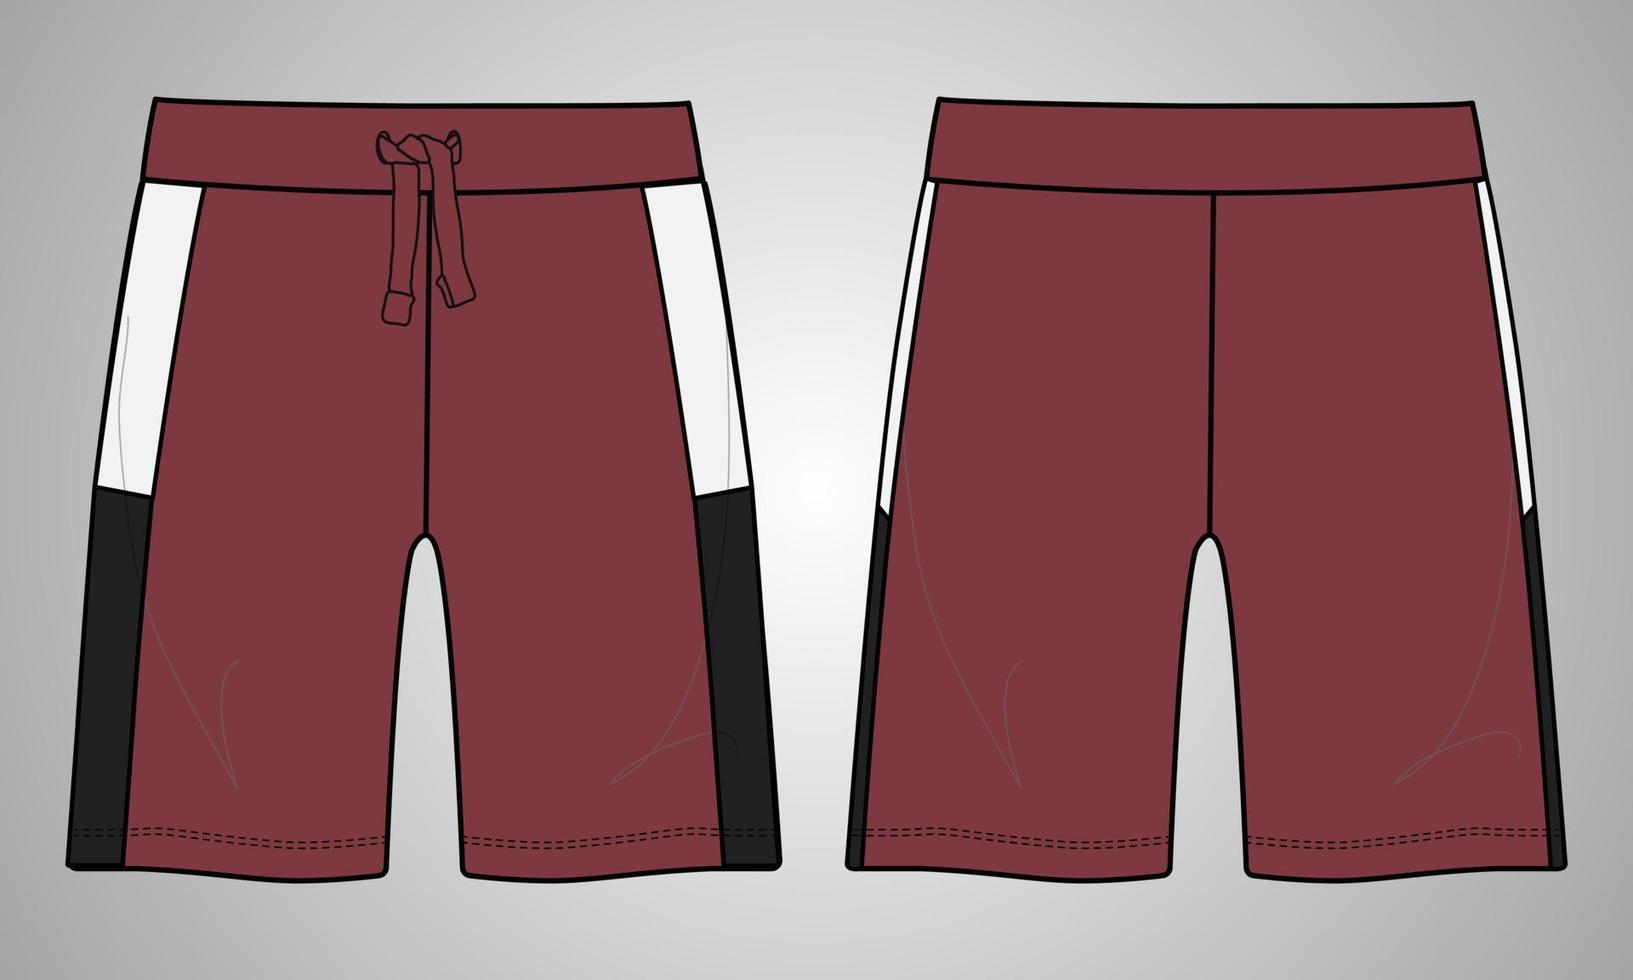 Boys Sweat Shorts pants flat style vector Illustration template